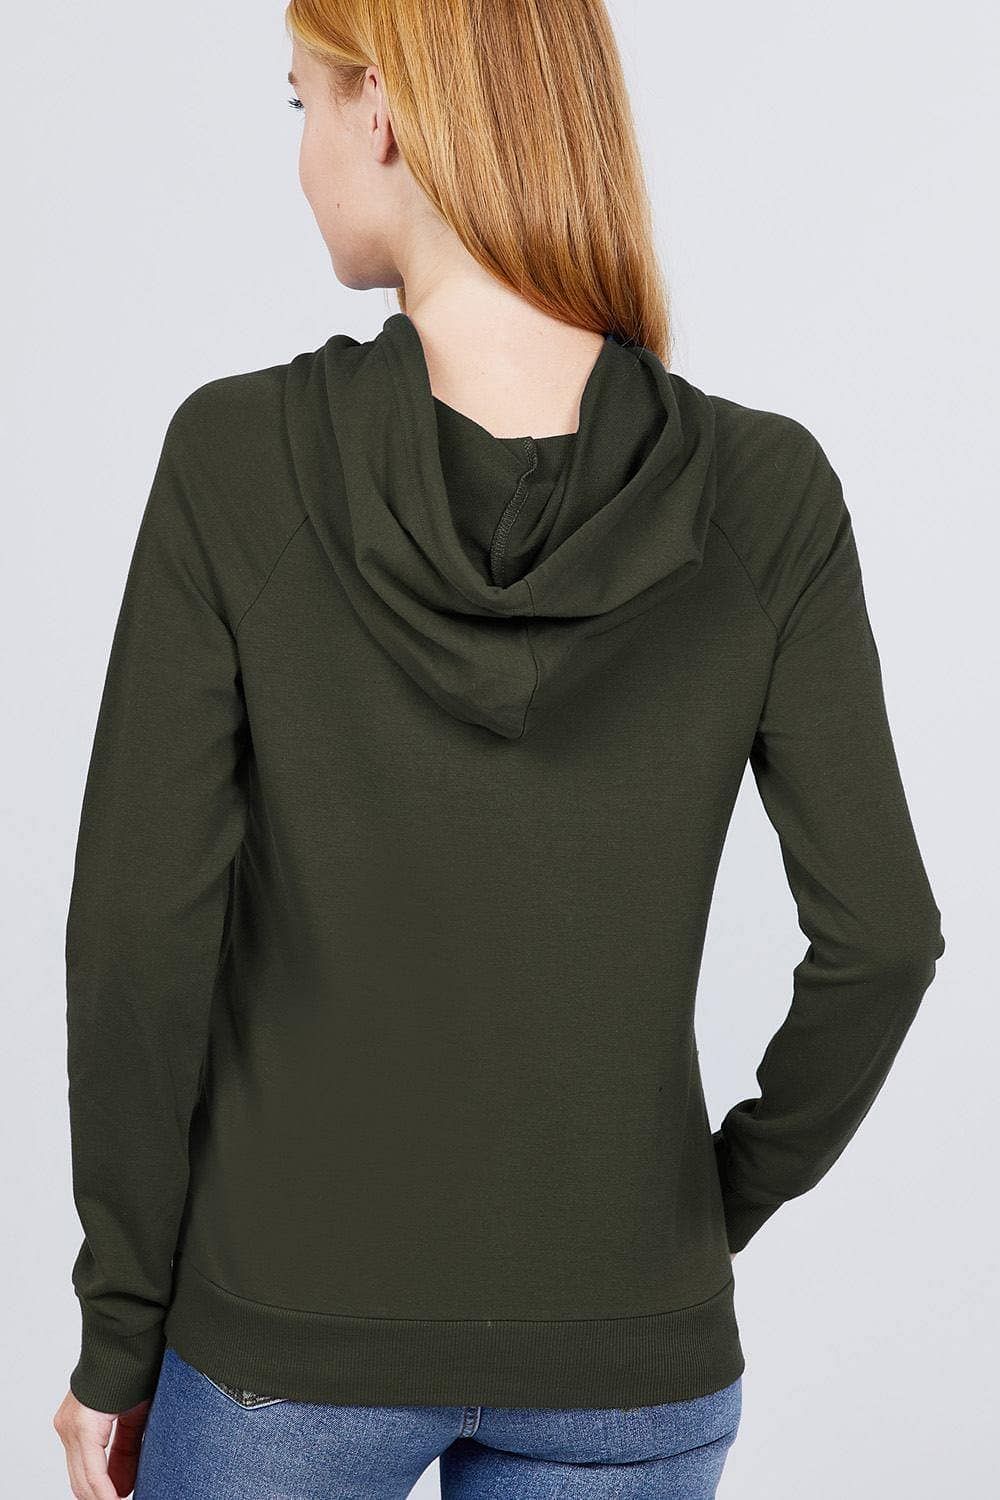 Dark Olive French Terry Long Sleeve Sweatshirt - Shopping Therapy M Sweatshirt